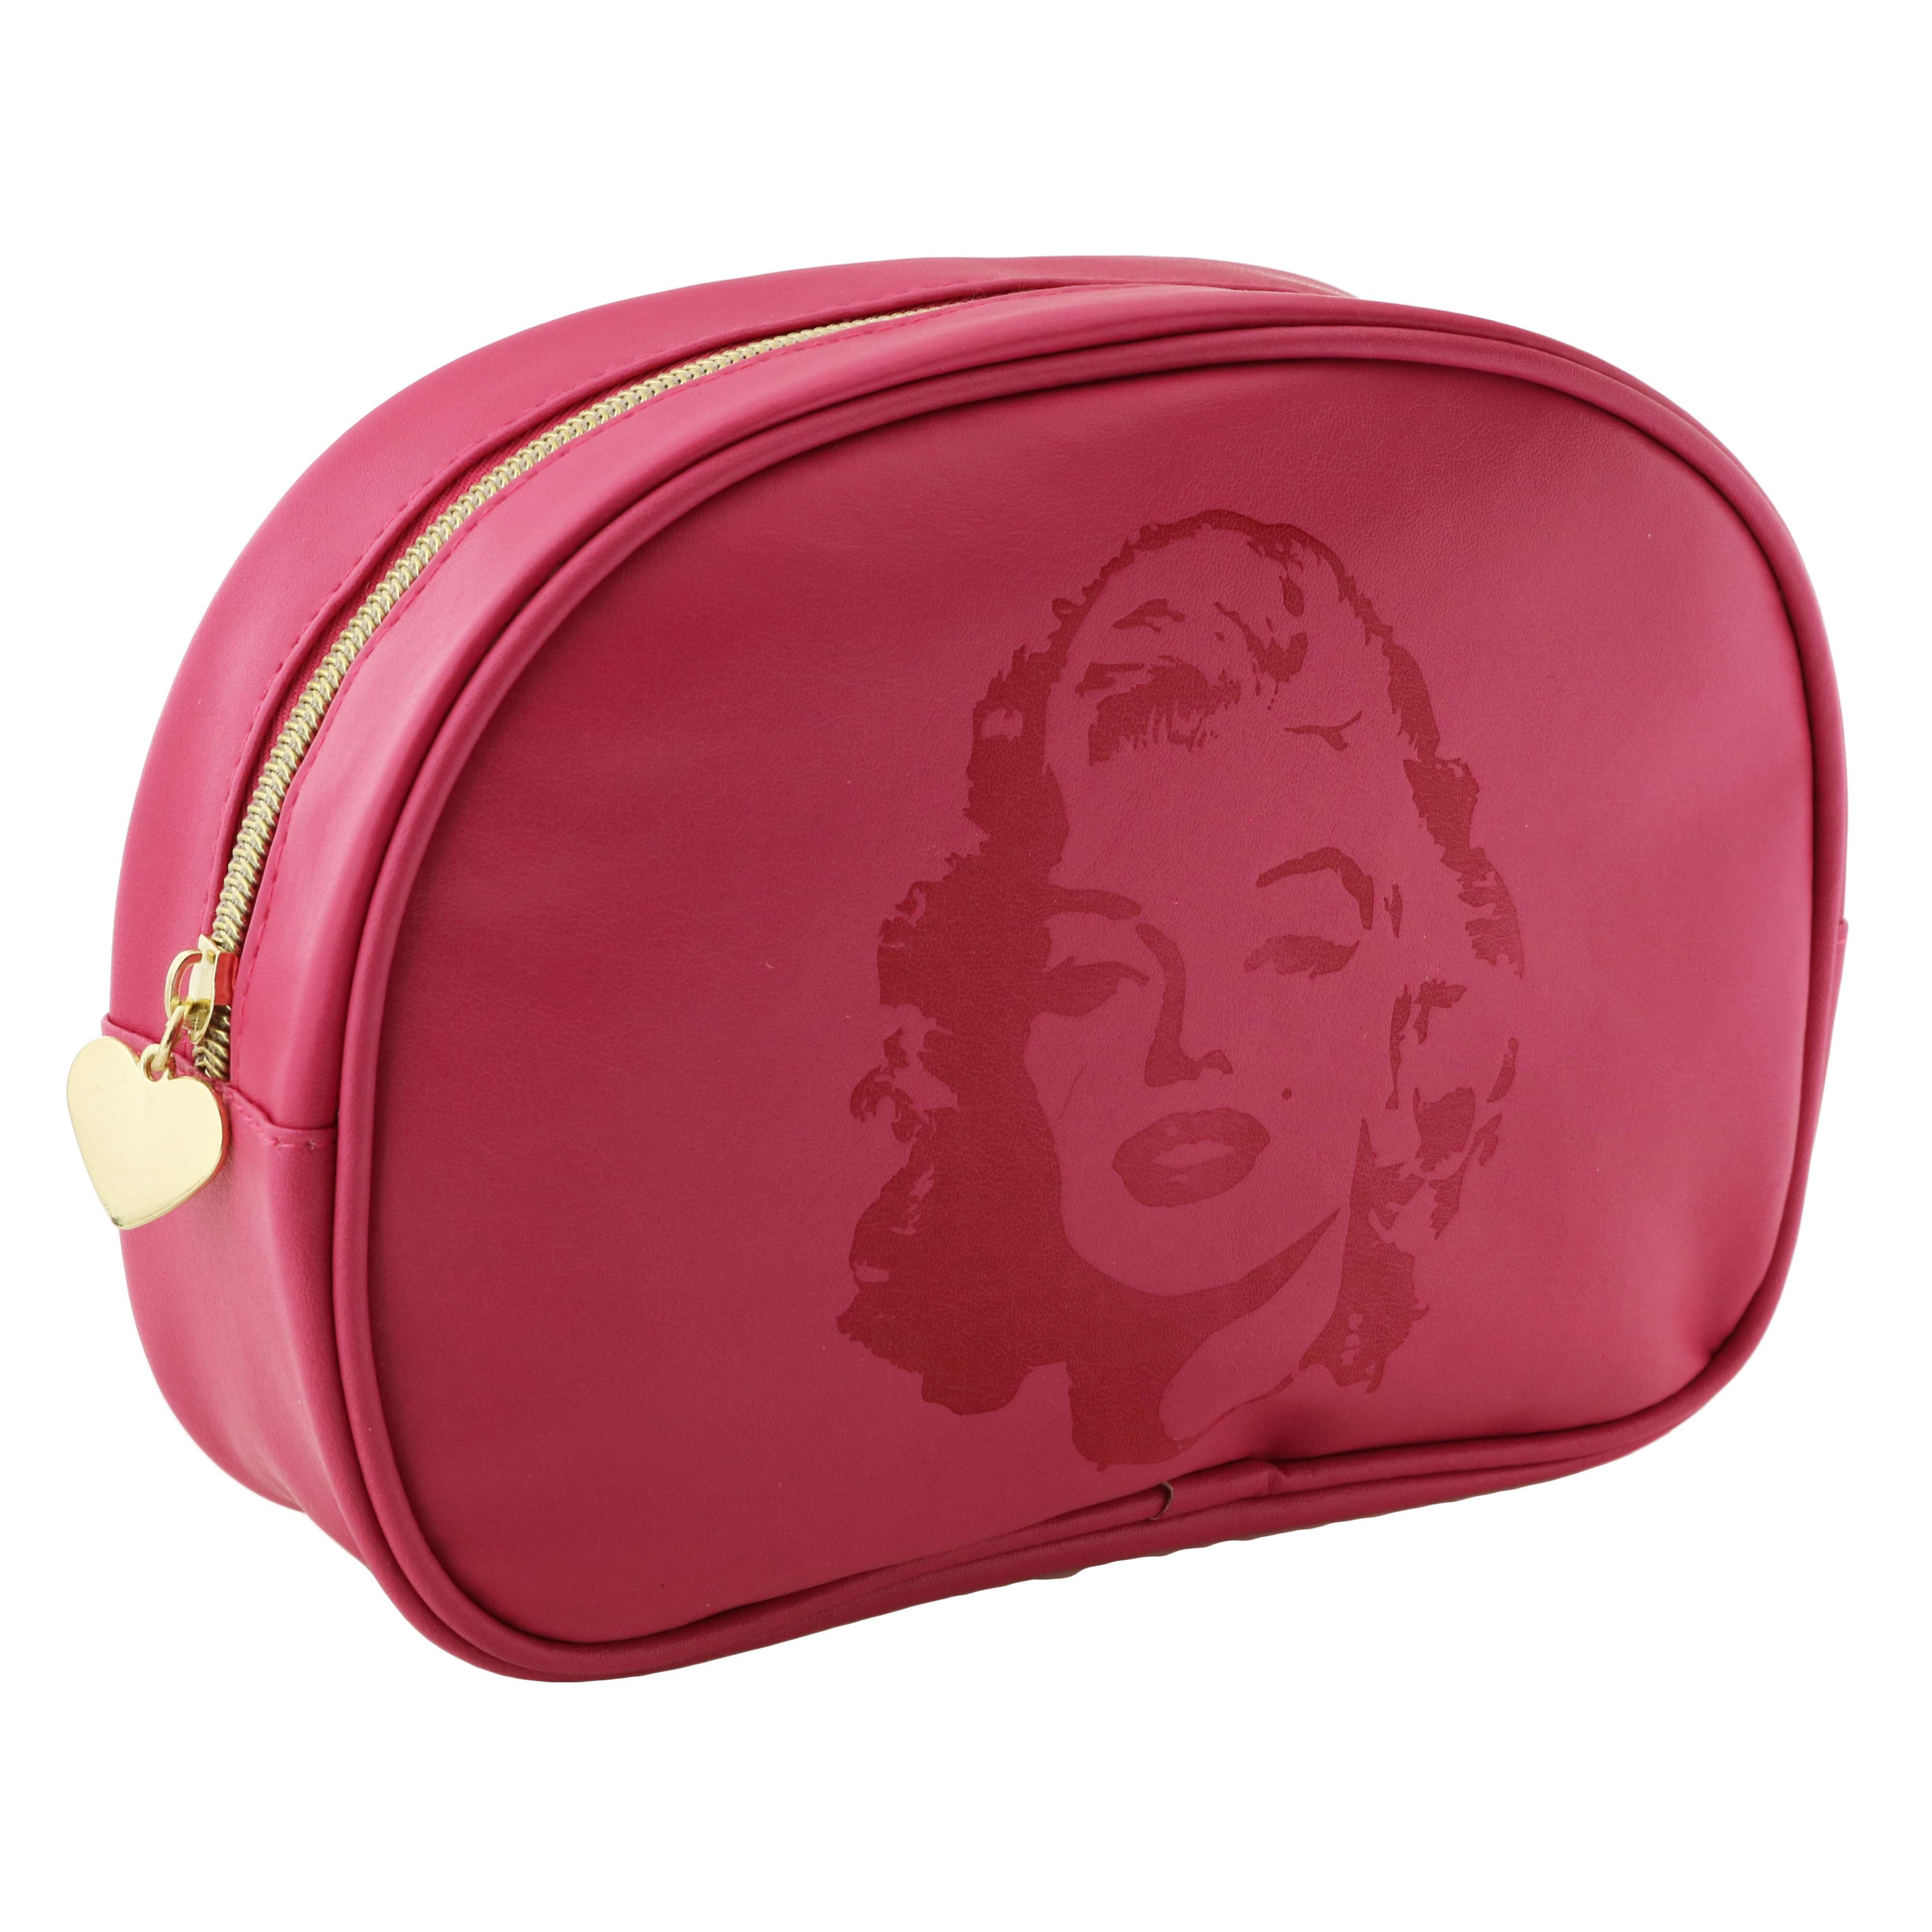 Marilyn Monroe Travel Bag Set • brand new with - Depop